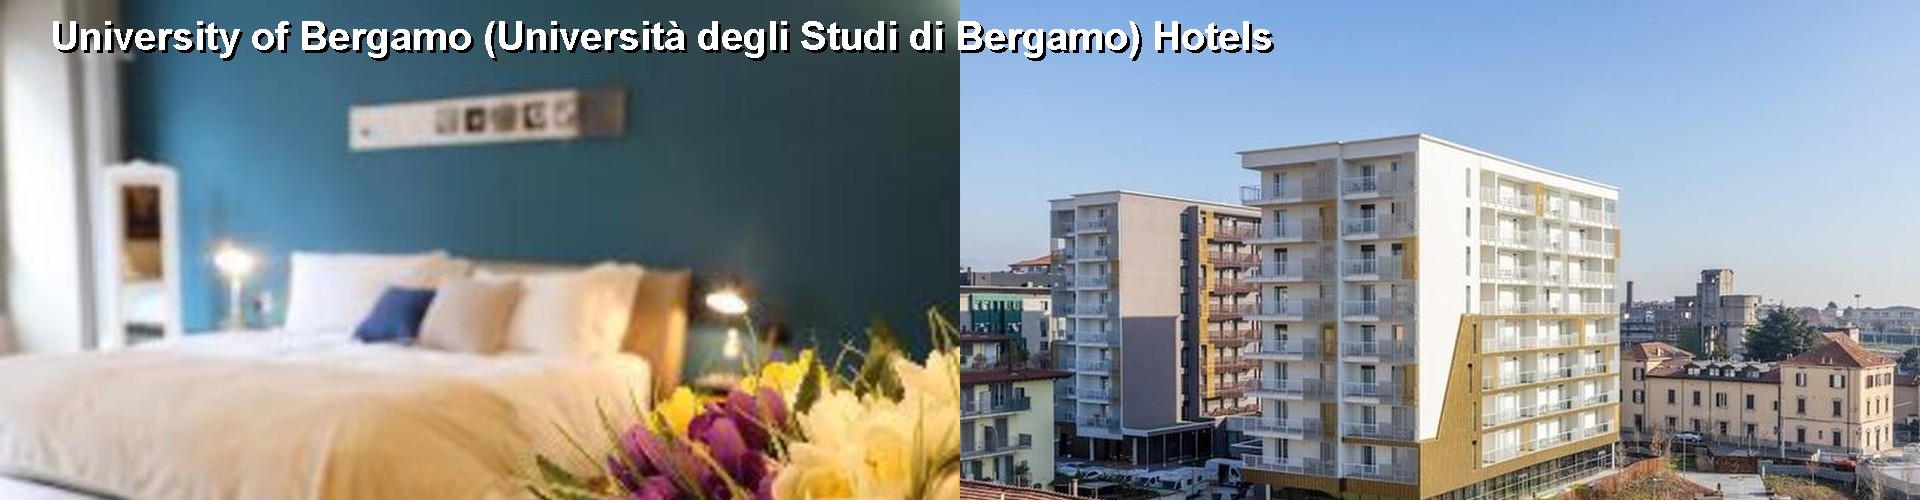 5 Best Hotels near University of Bergamo (Università degli Studi di Bergamo)